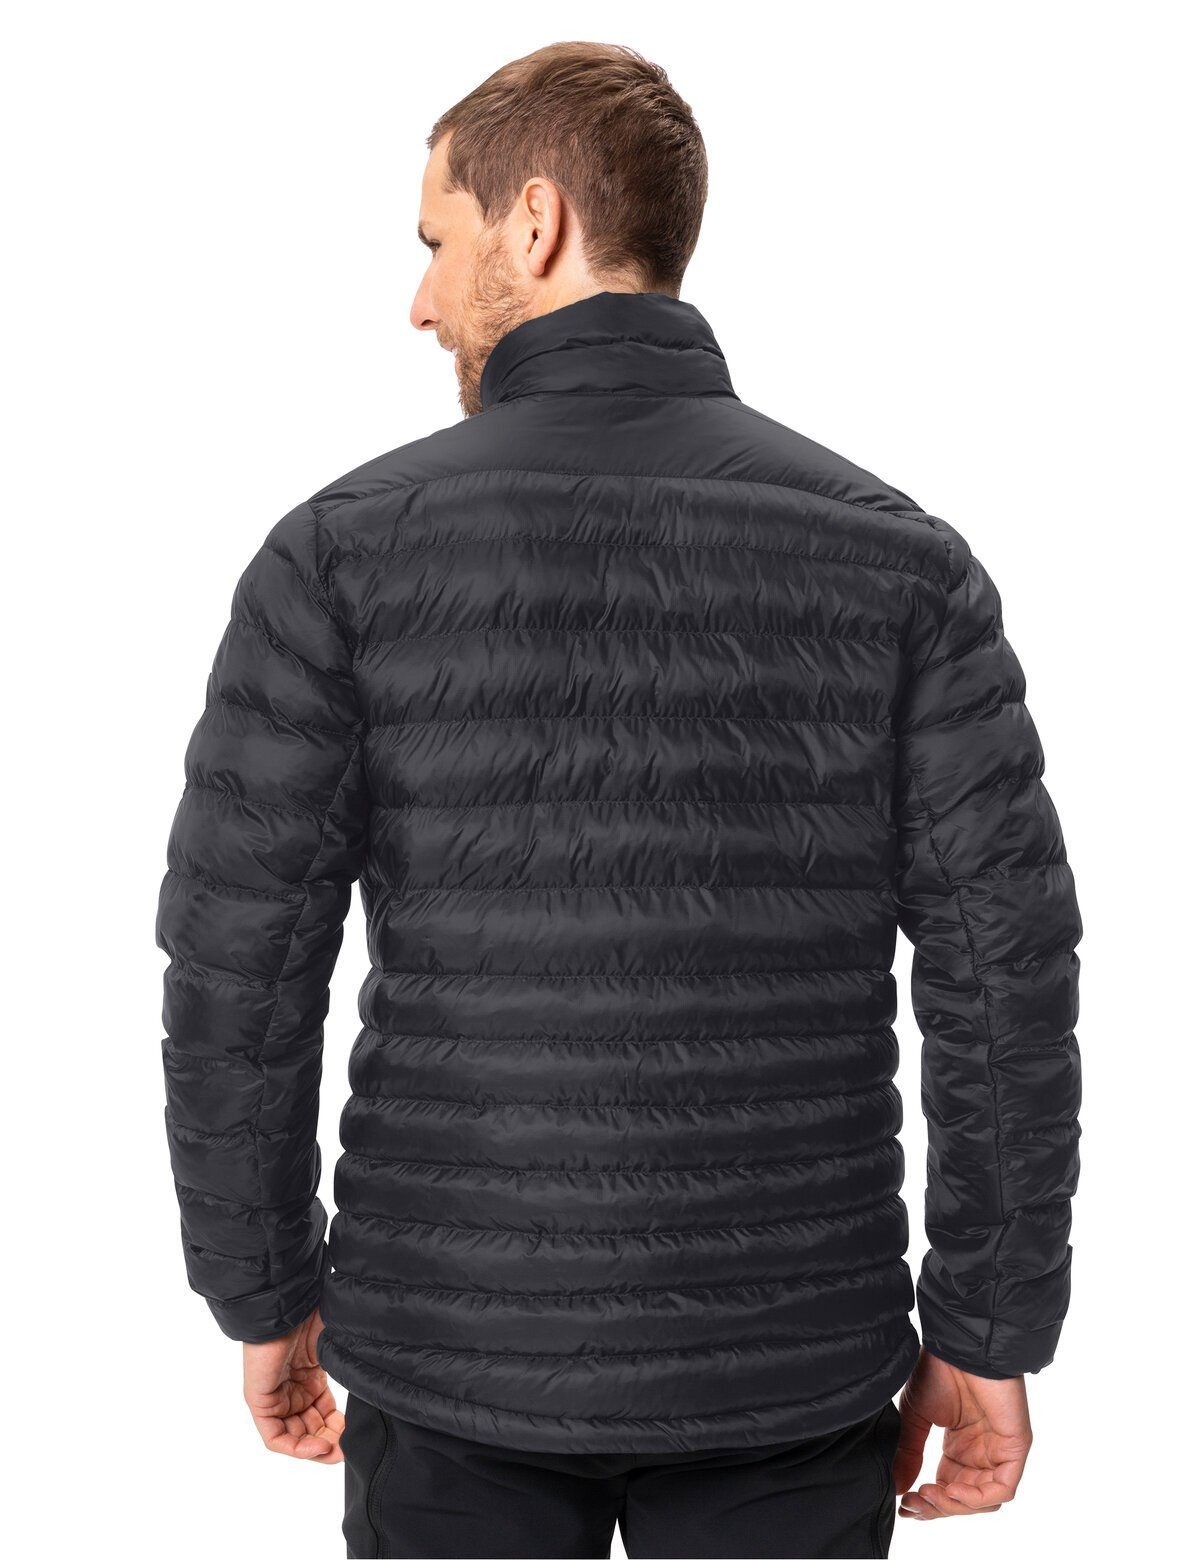 Batura VAUDE black Klimaneutral Outdoorjacke (1-St) Insulation kompensiert Jacket Men's